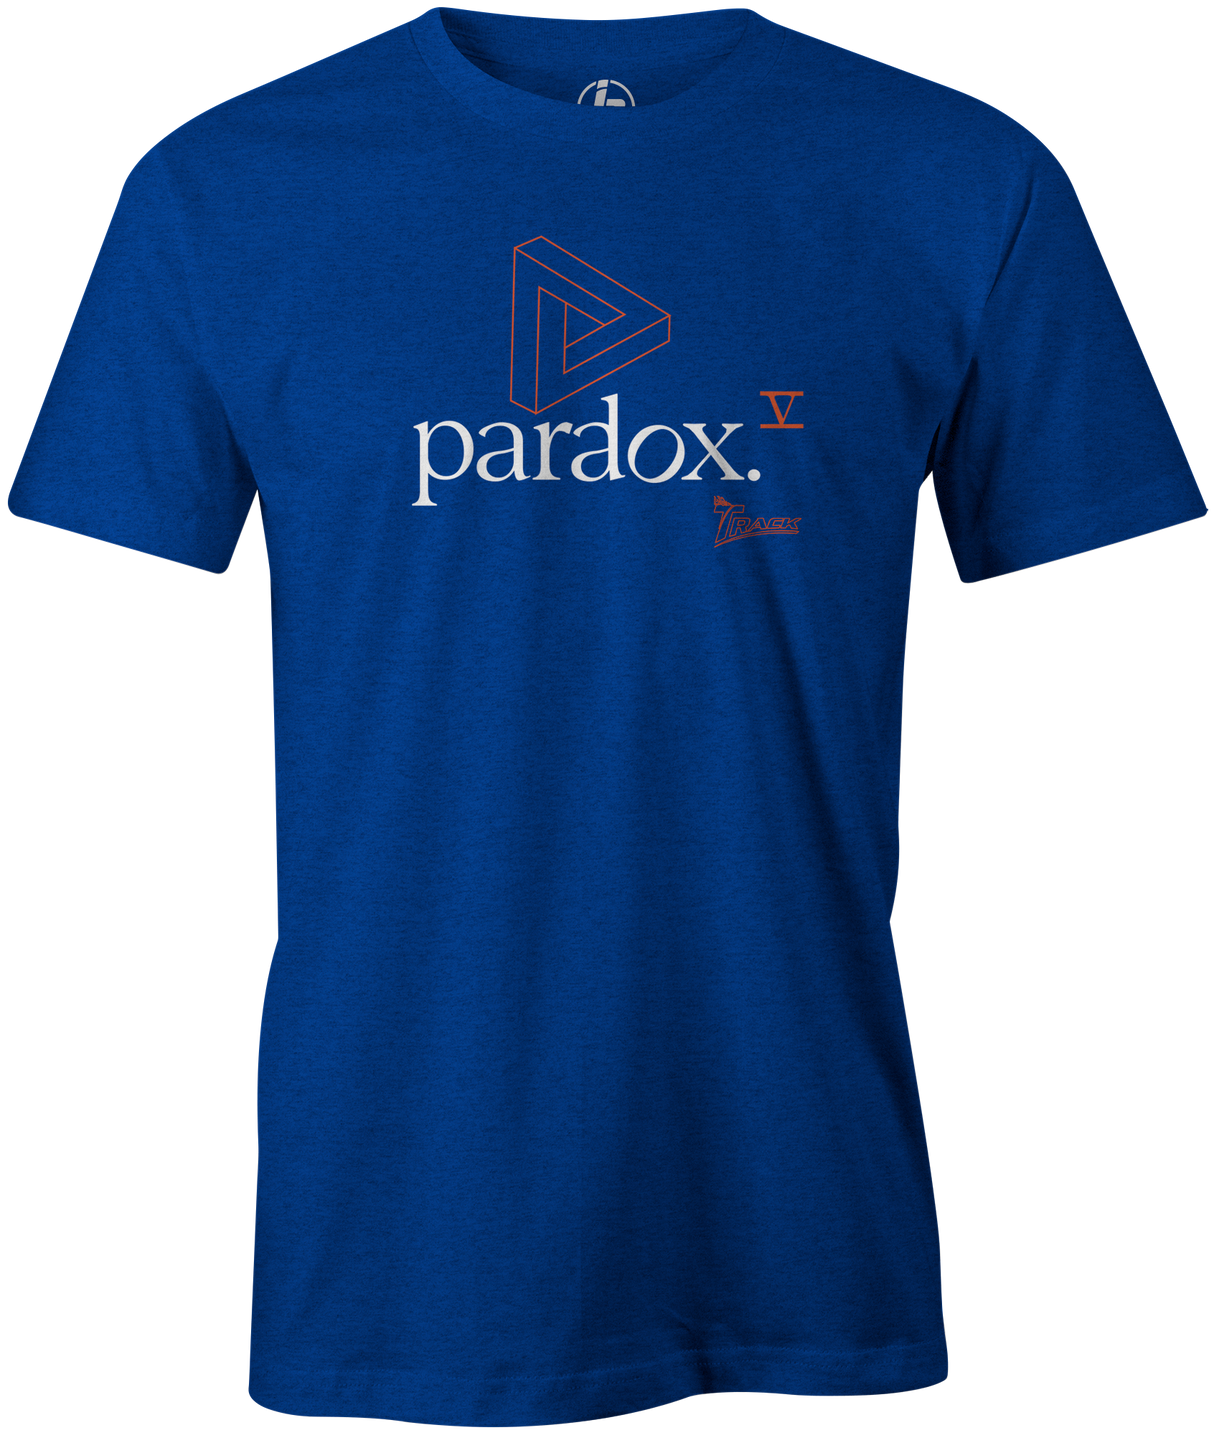 Paradox V Men's T-shirt, Blue, bowling, bowling ball, logo, track bowling, track, smart bowling, tshirt, tee, tee-shirt, tee shirt